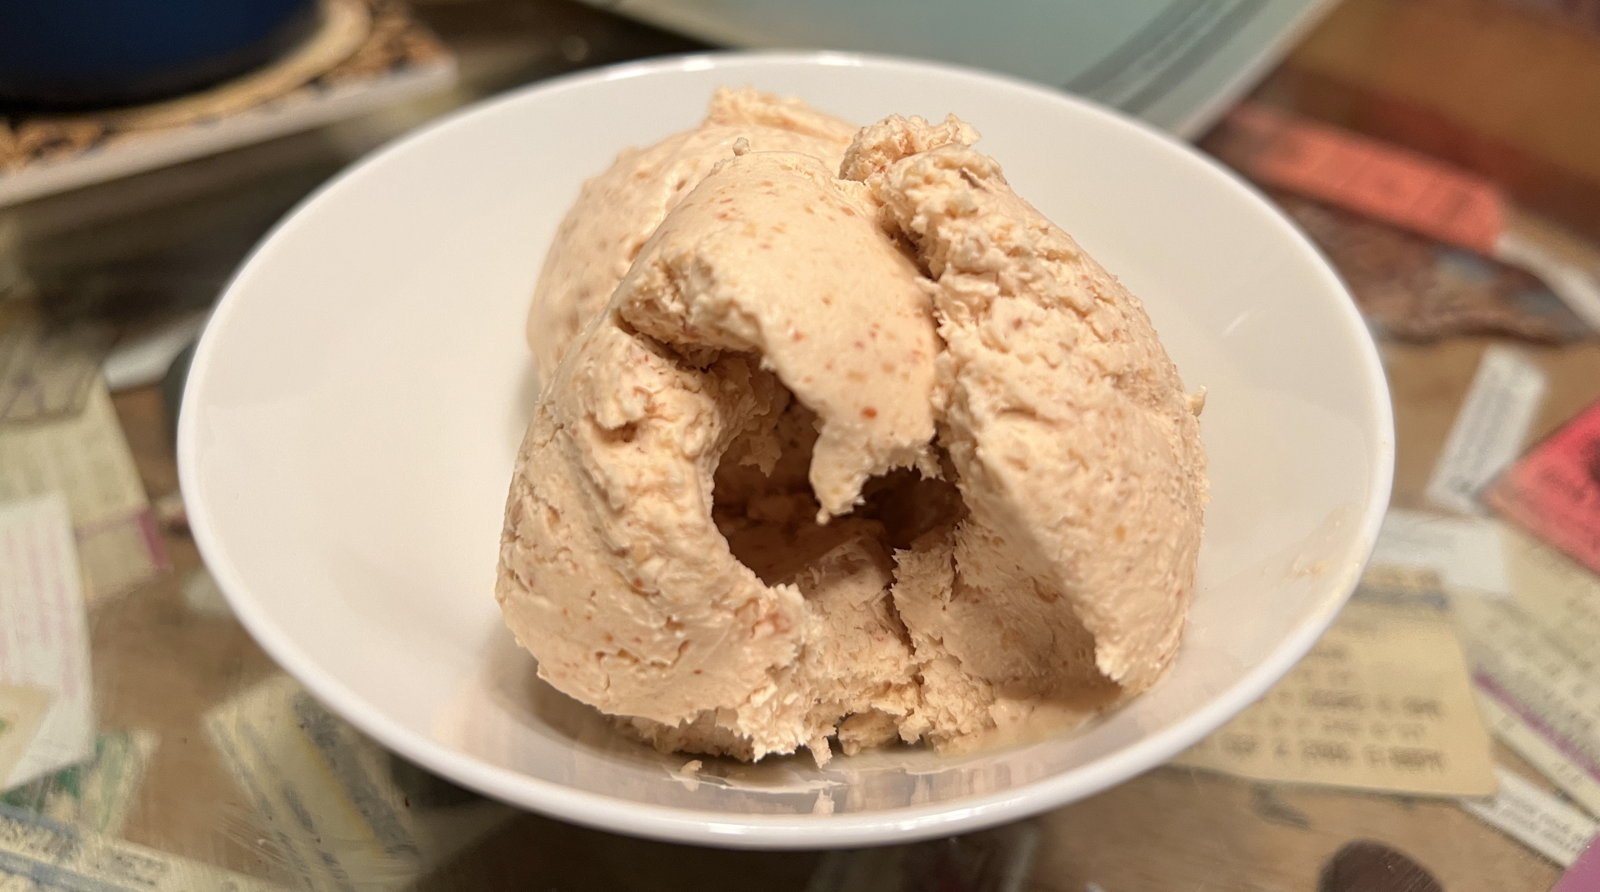 Maple Peanut Butter Ice Cream